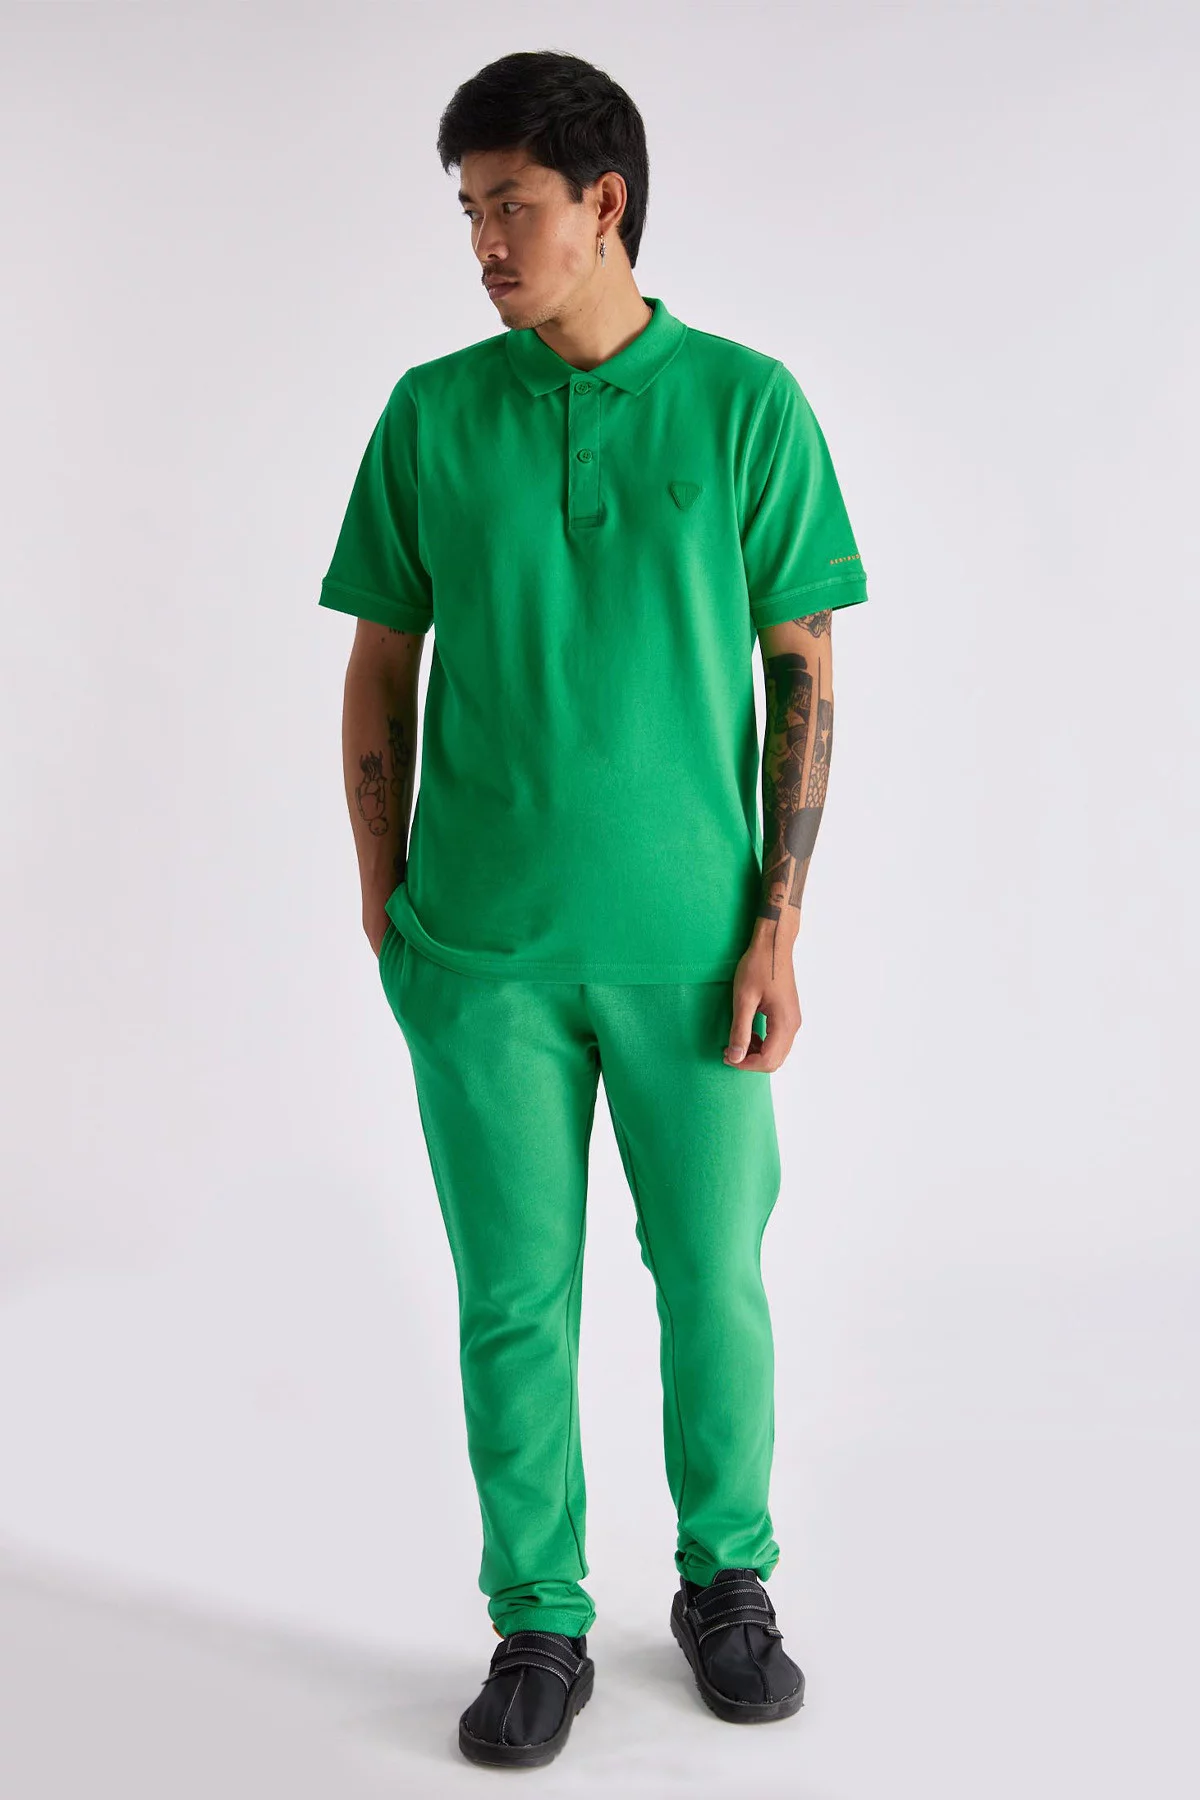 Unisex cotton jogging suit Noemie Green